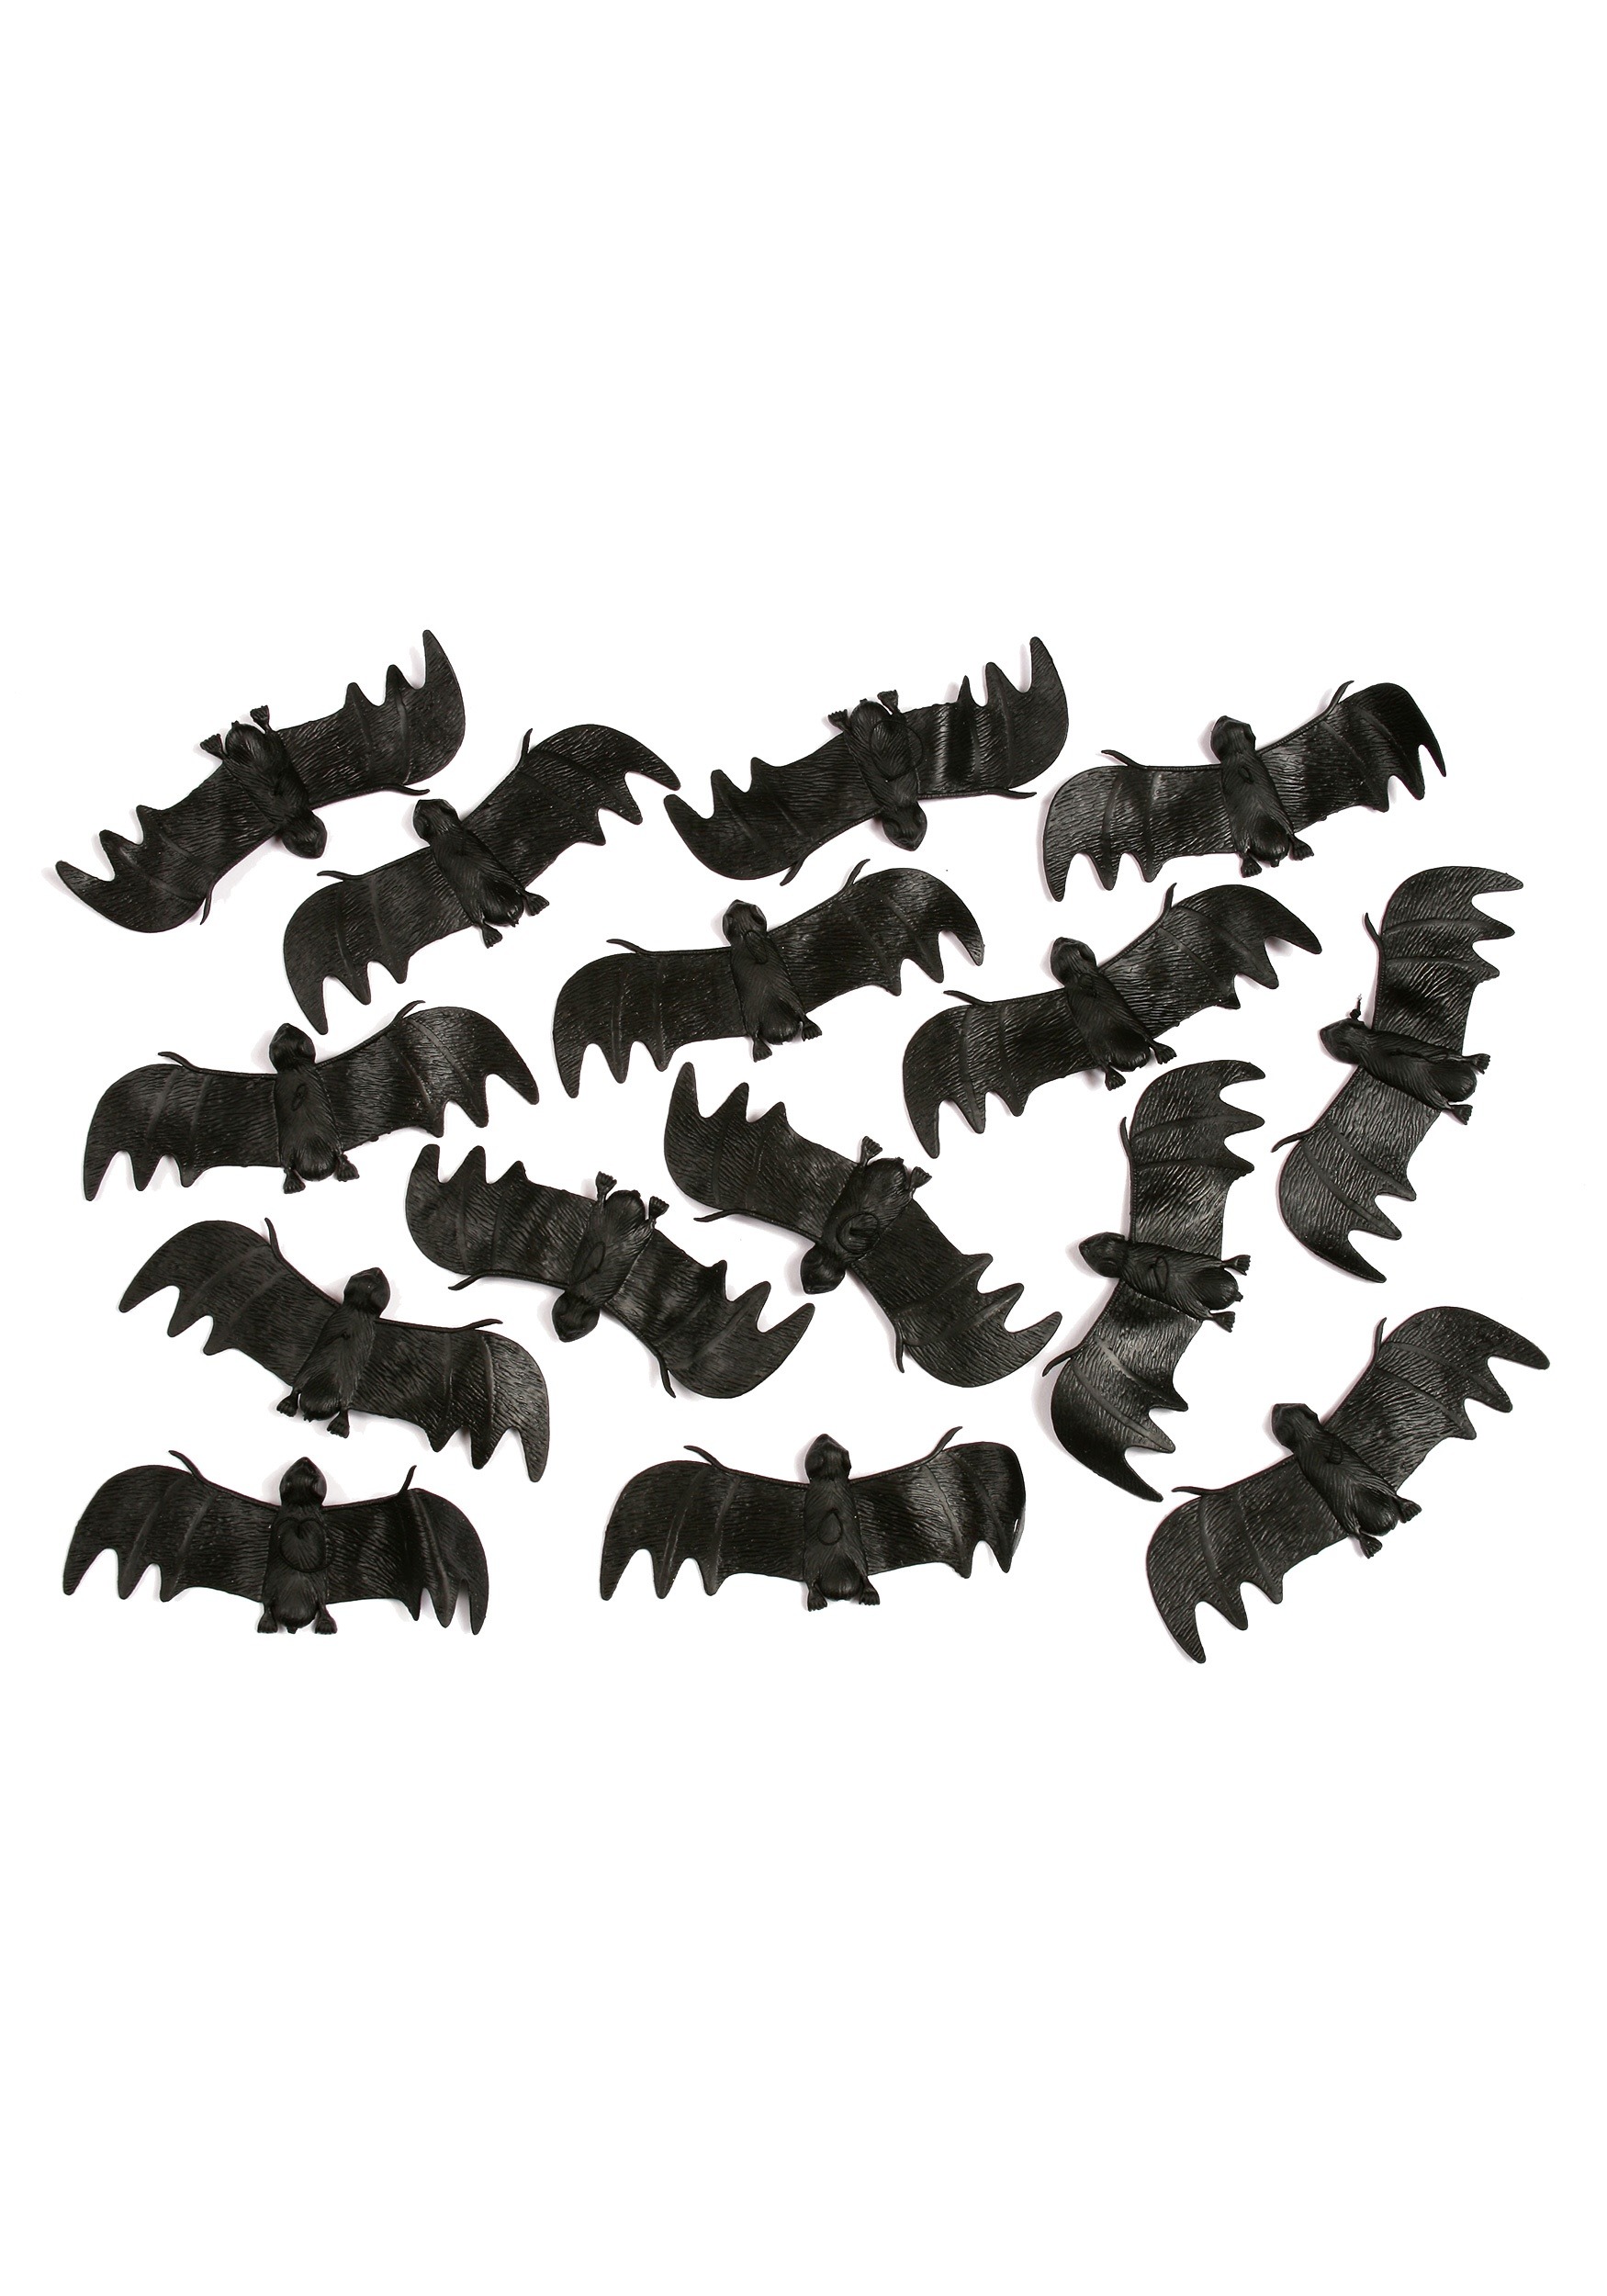 Bag of Black Bats Halloween Decoration